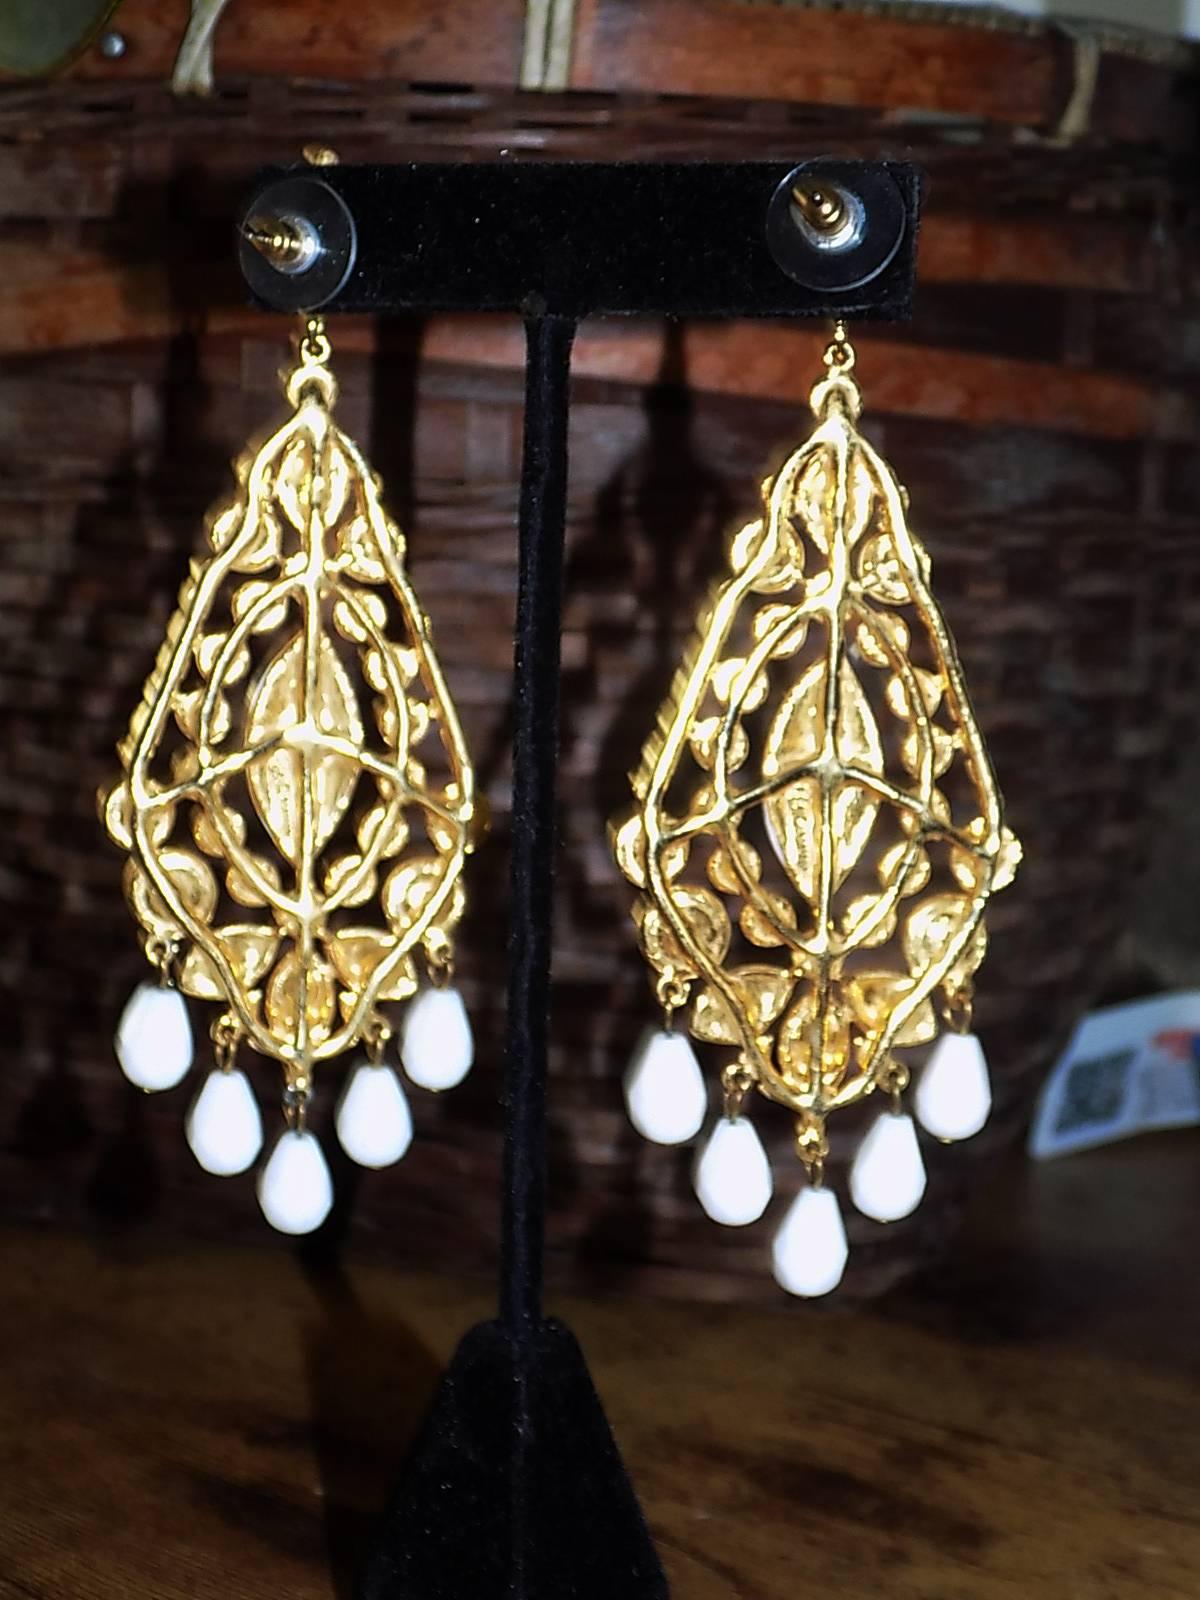 Artist Spectacular vintage Ben Amun chandelier earrings